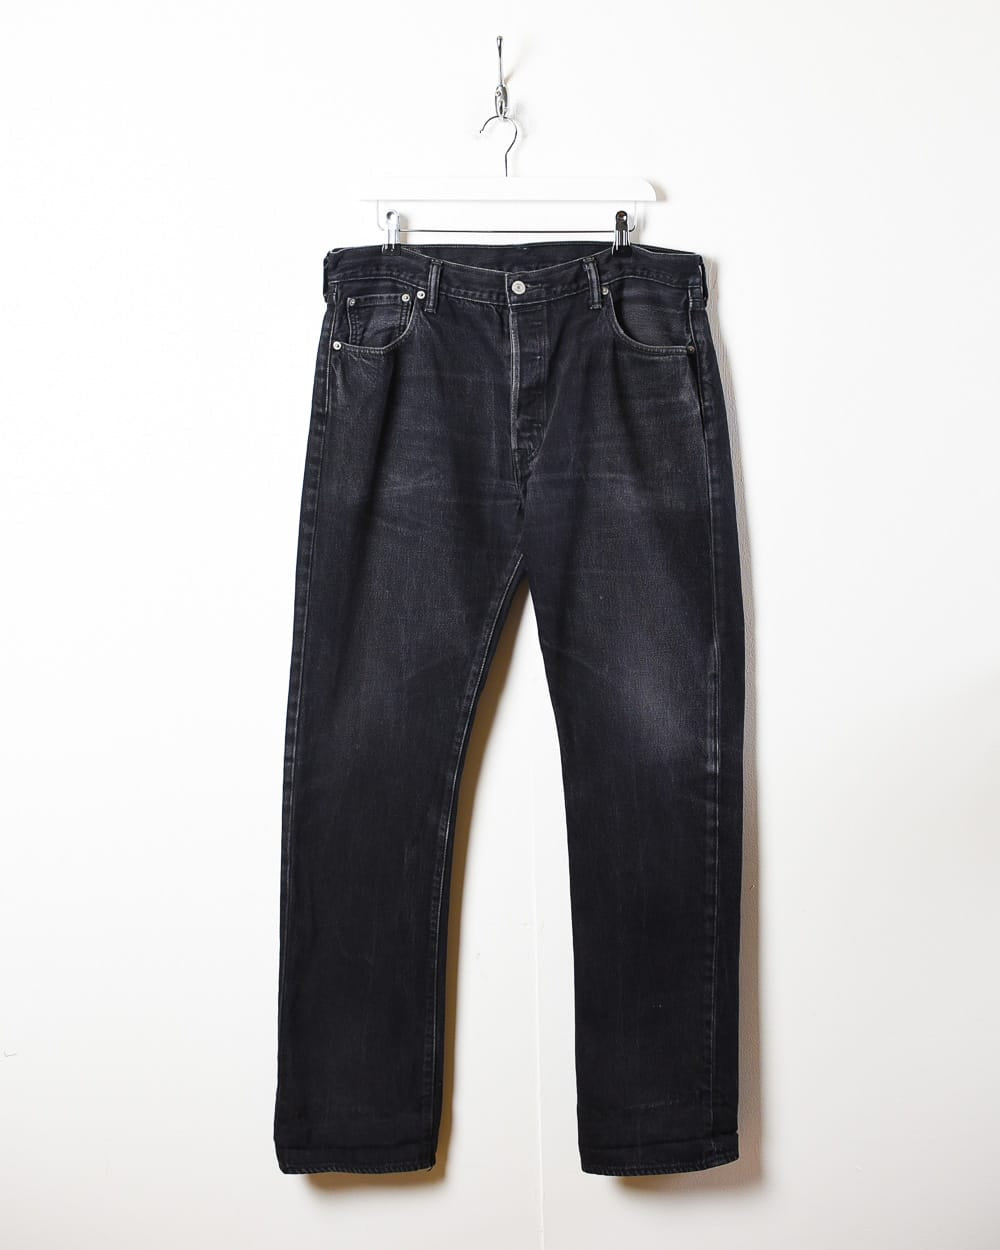 Levi's 501 Jeans - W36 L34